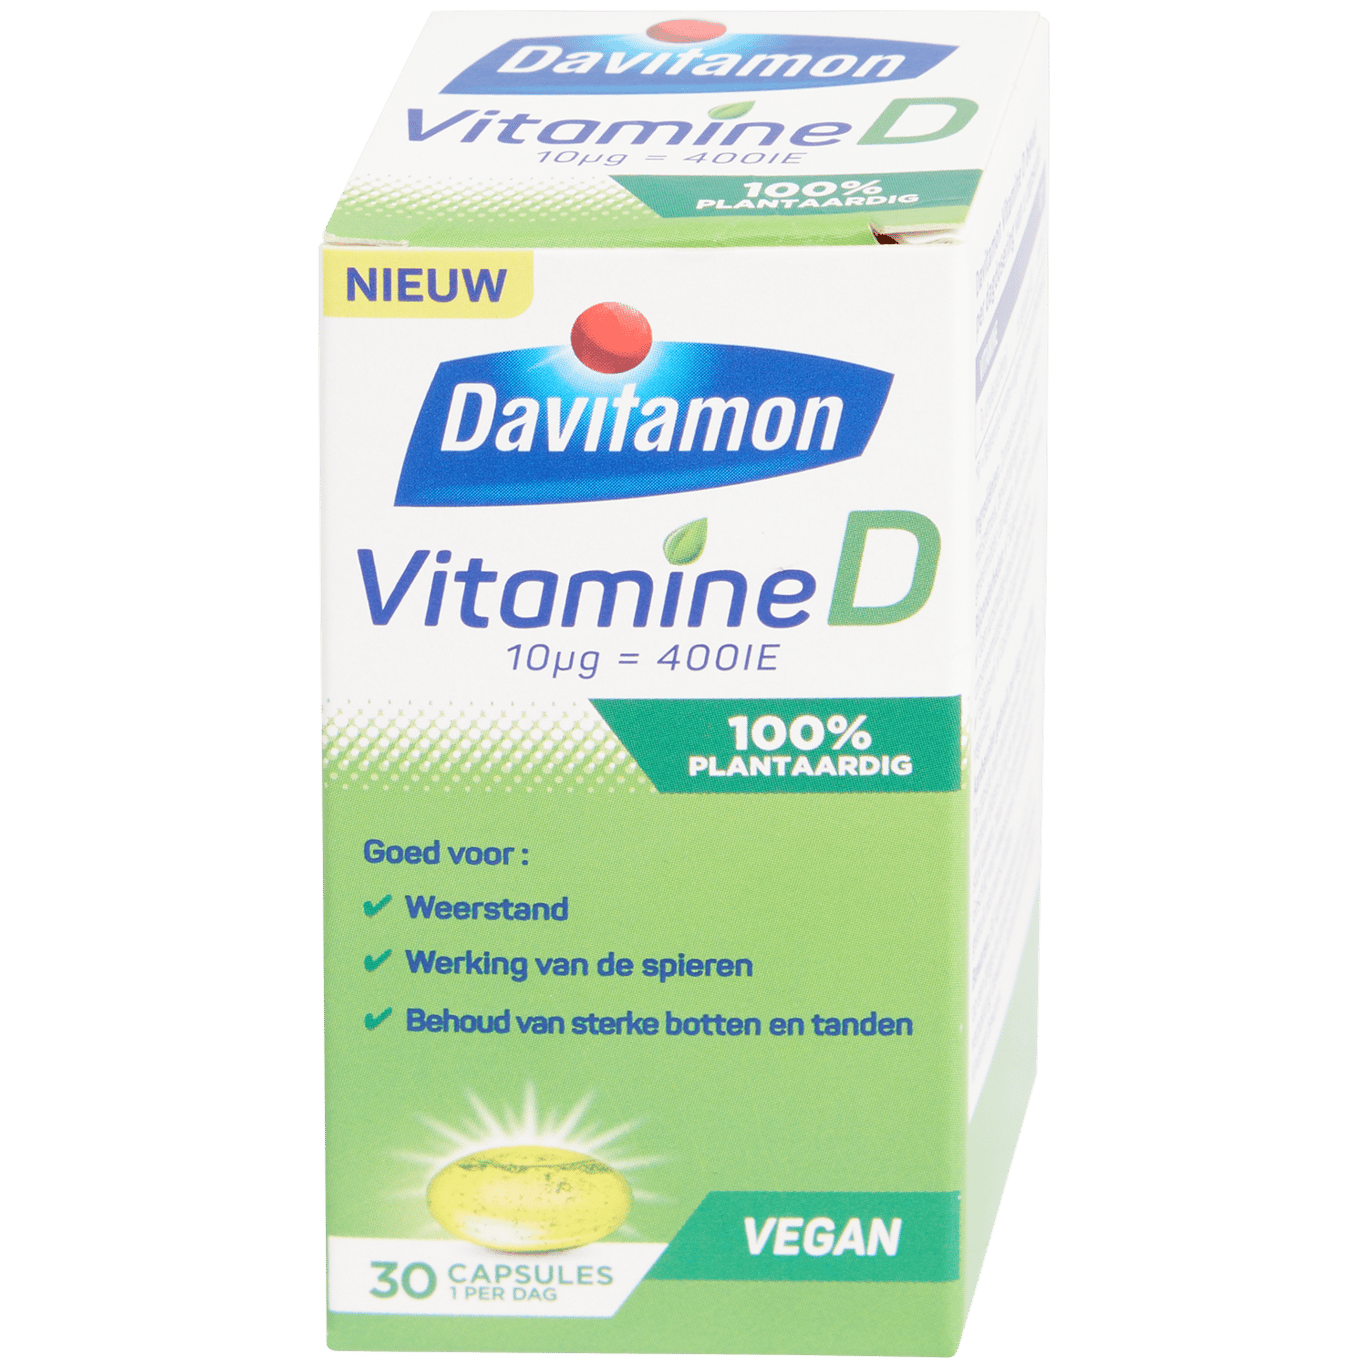 Davitamon vitamine D